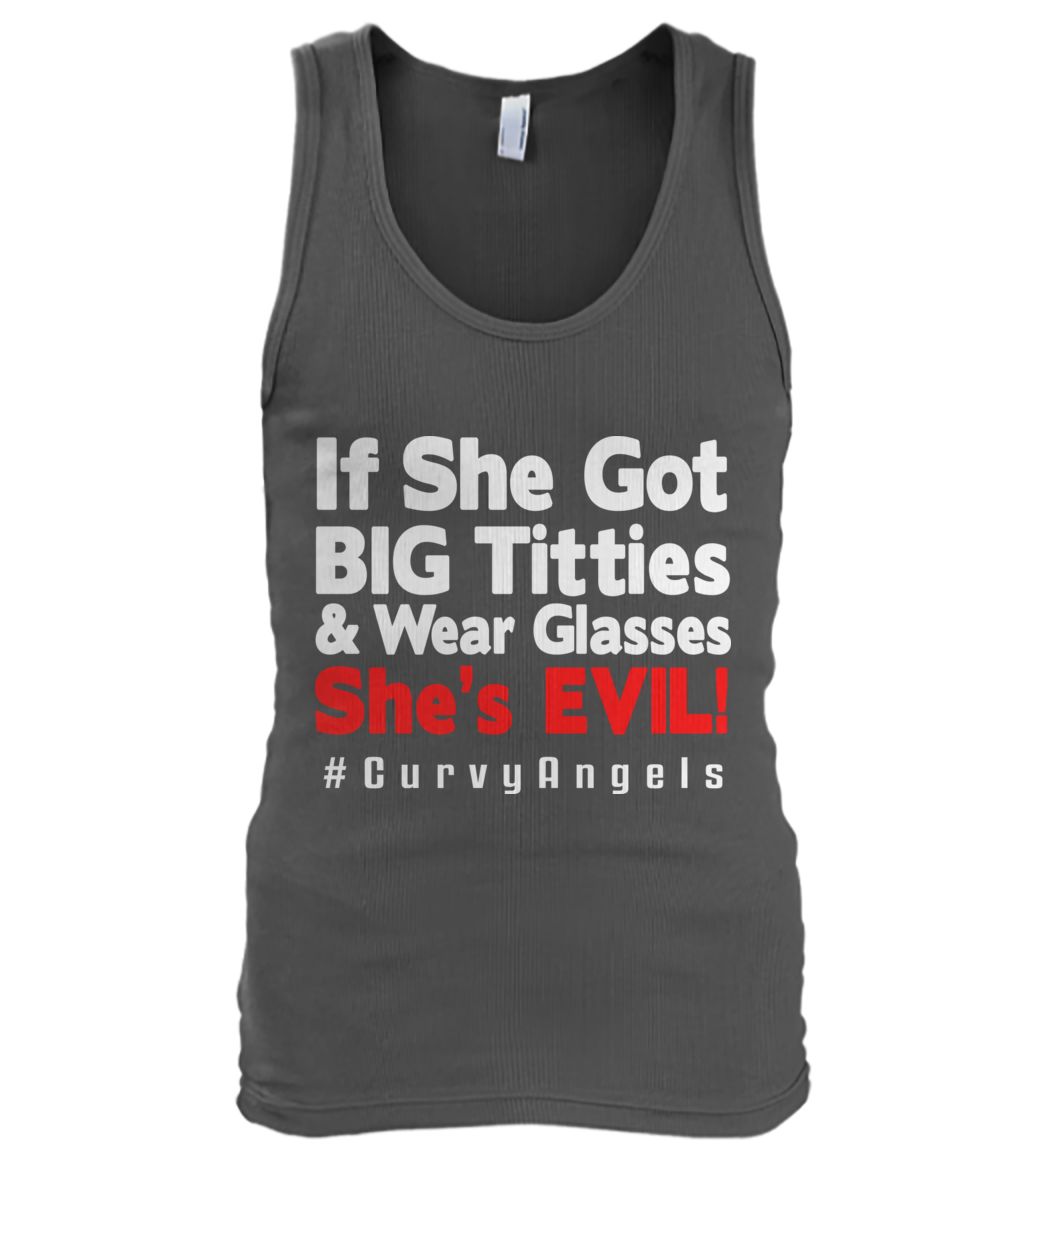 If she got big titties and wear glasses she's evil #curvyangles men's tank top